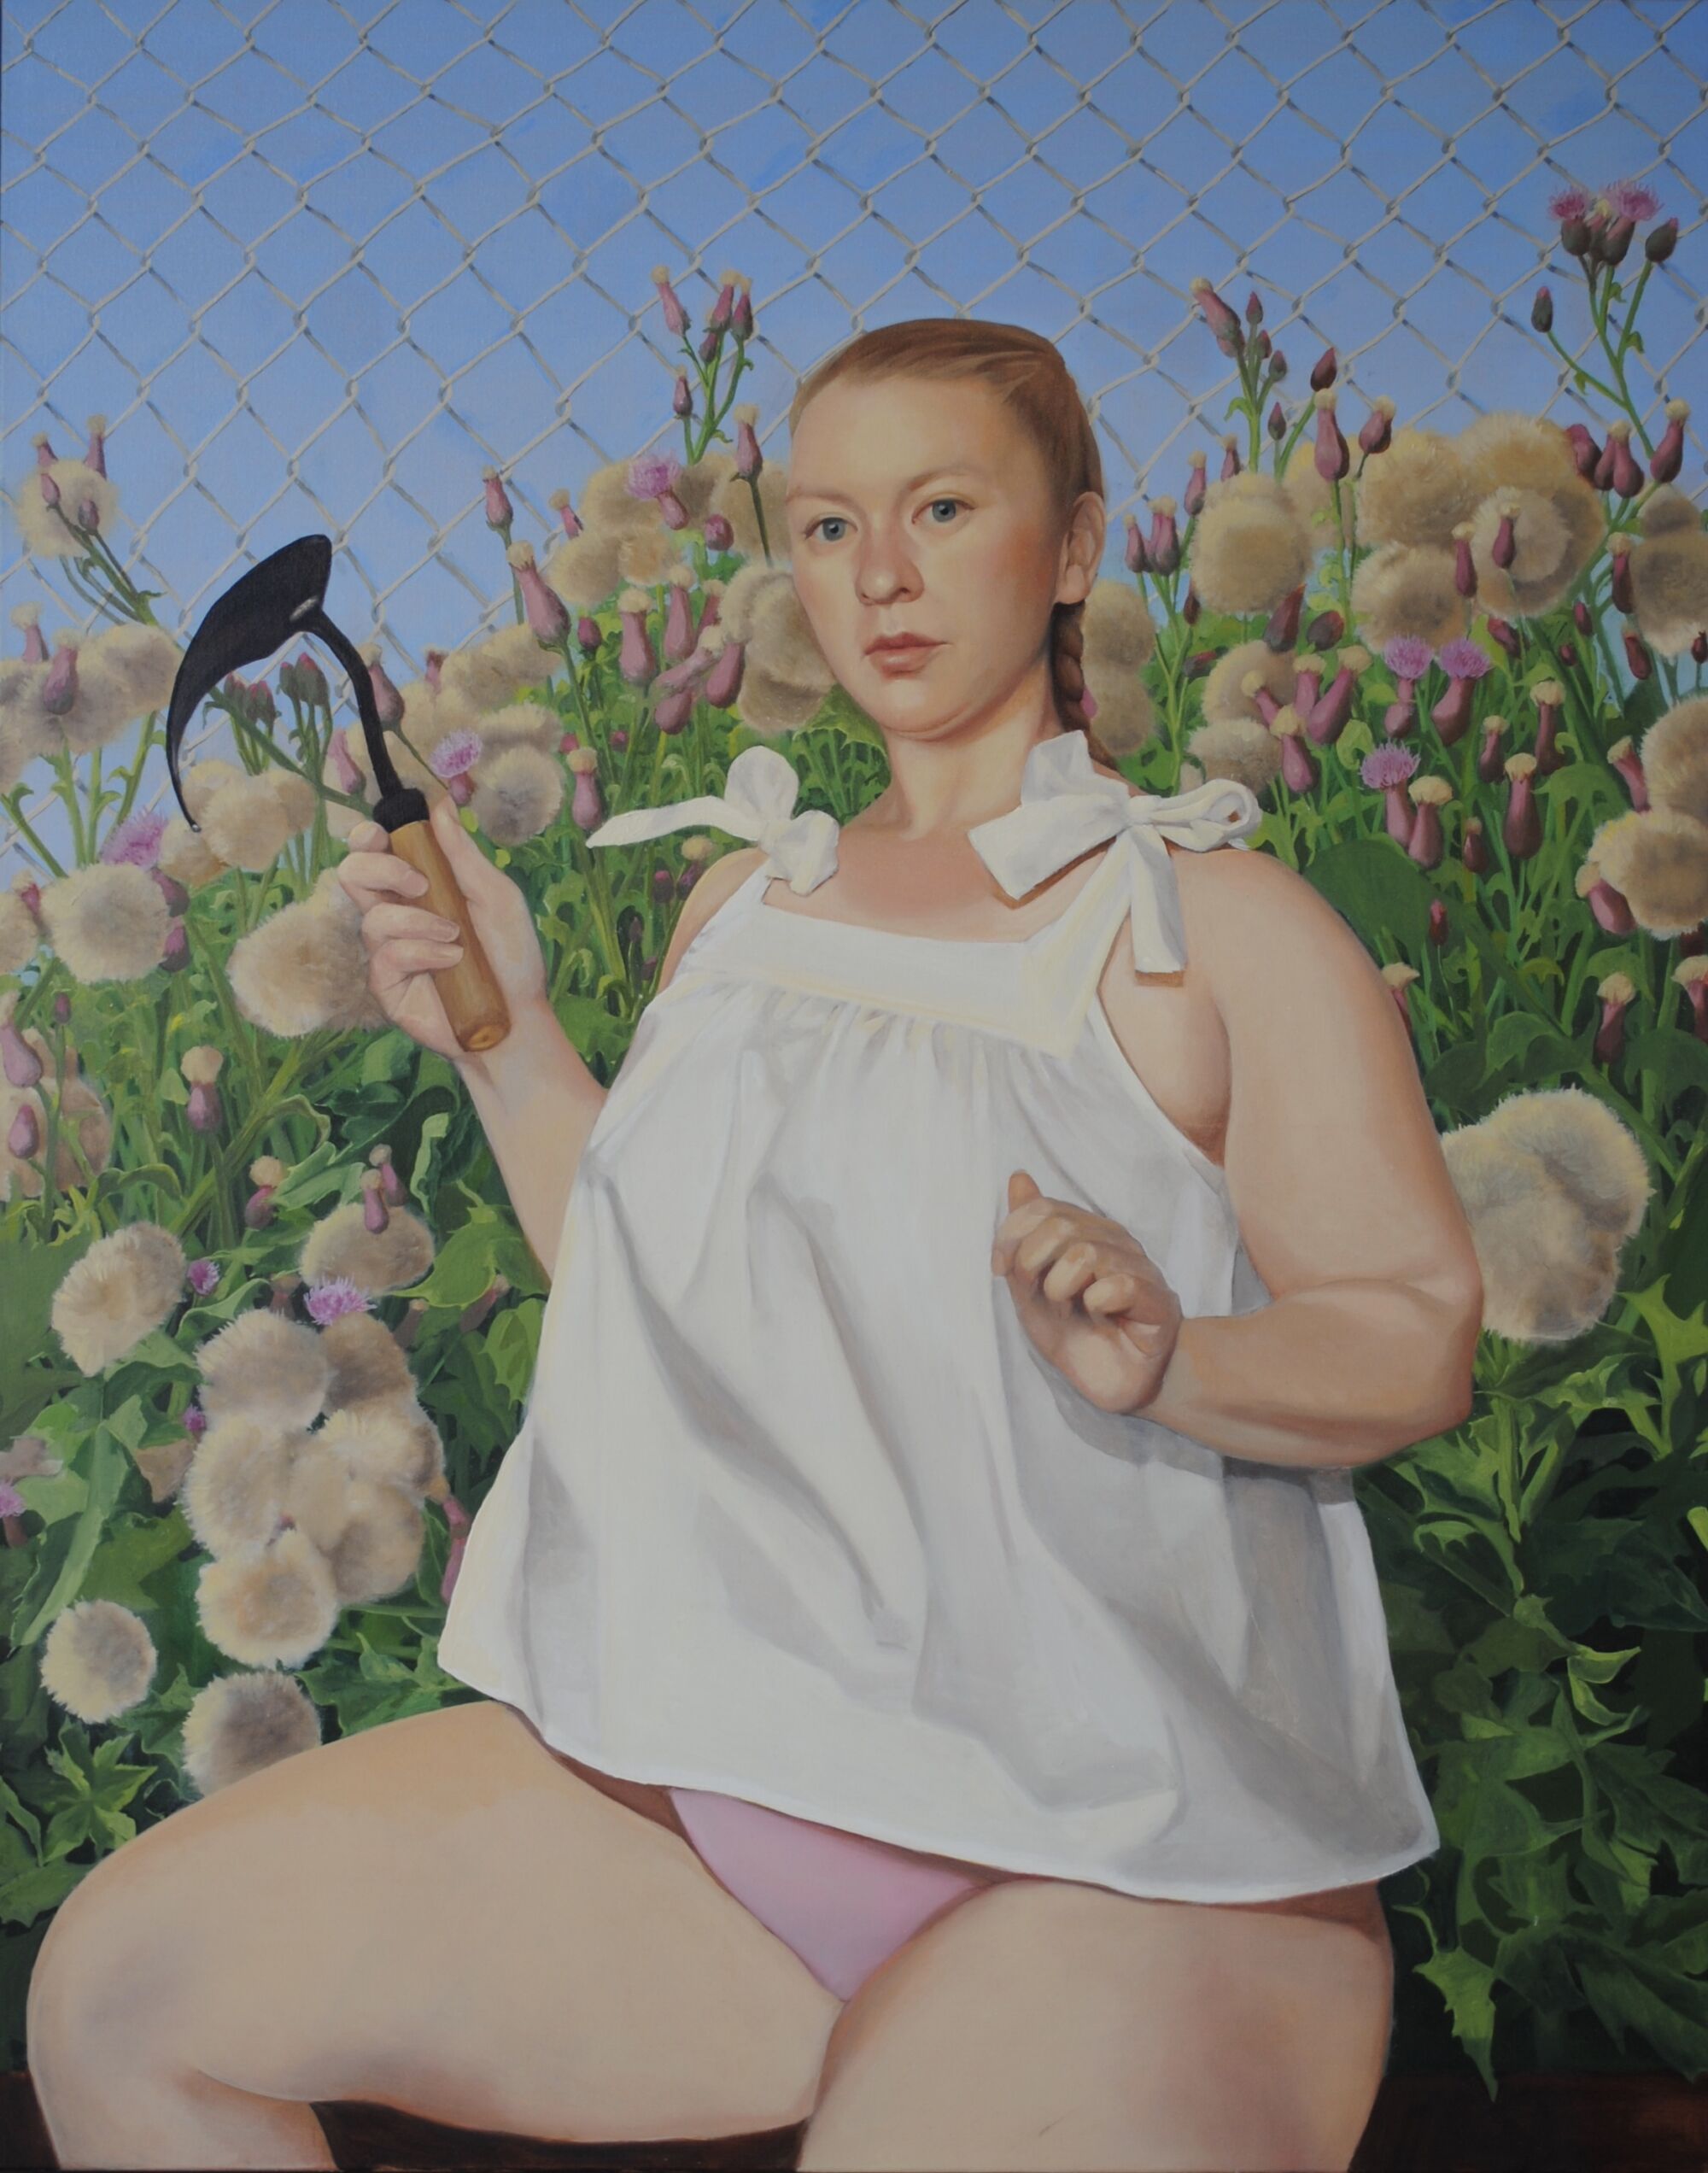 The Wick - Feature Dublin-based figurative painter Vanessa Jones